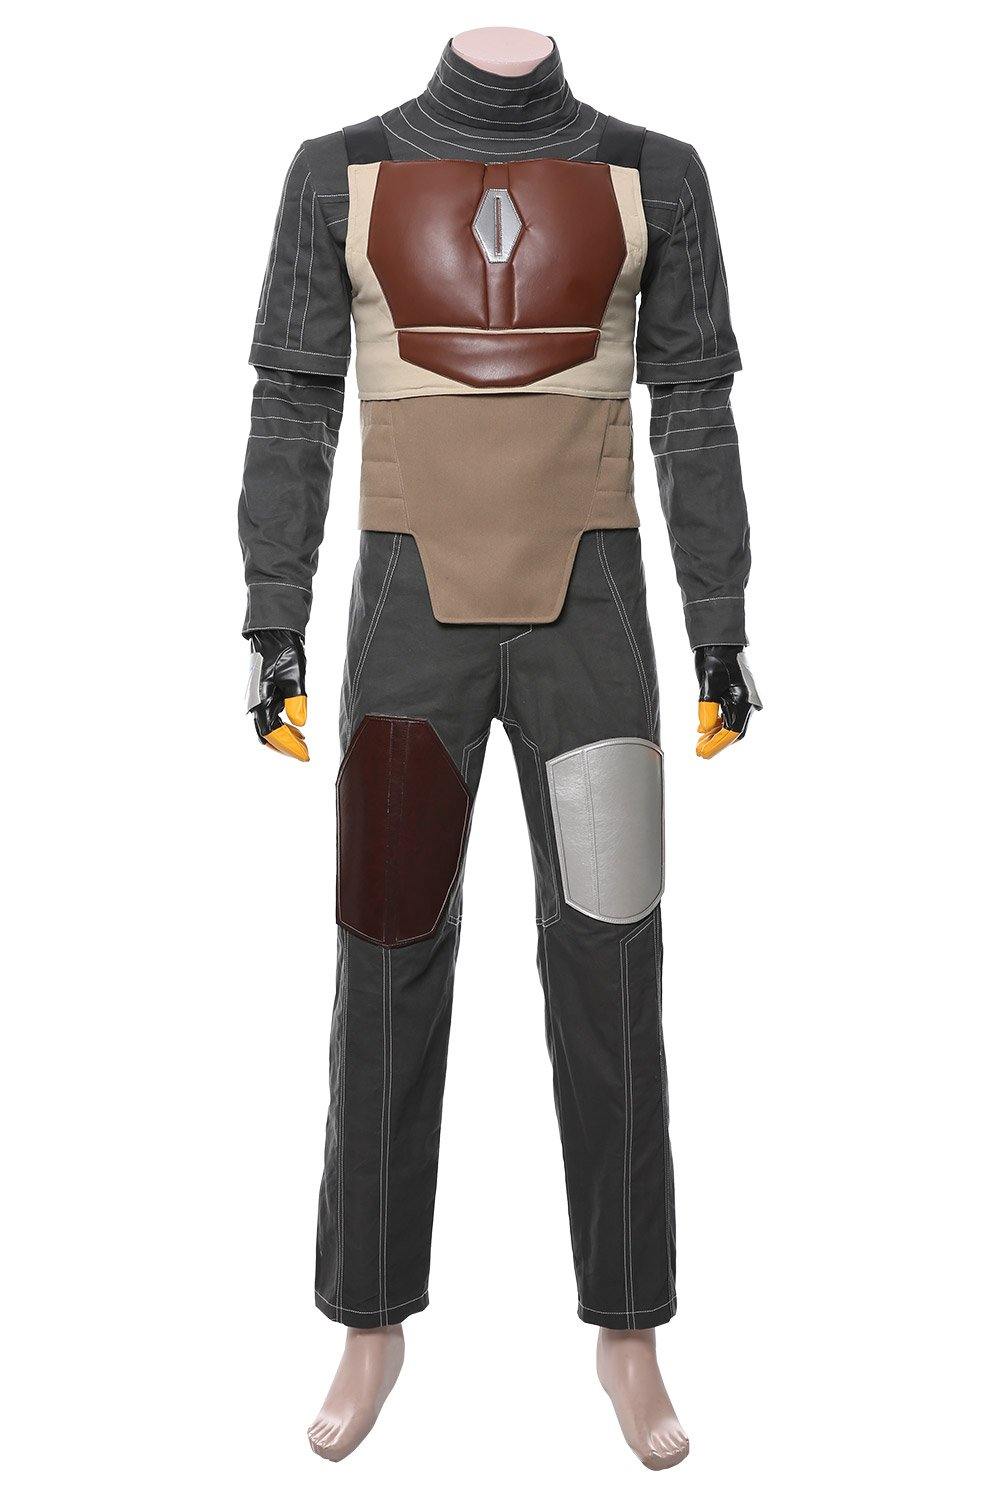 The Mandalorian Star Wars Cosplay Kostüm - cosplaycartde